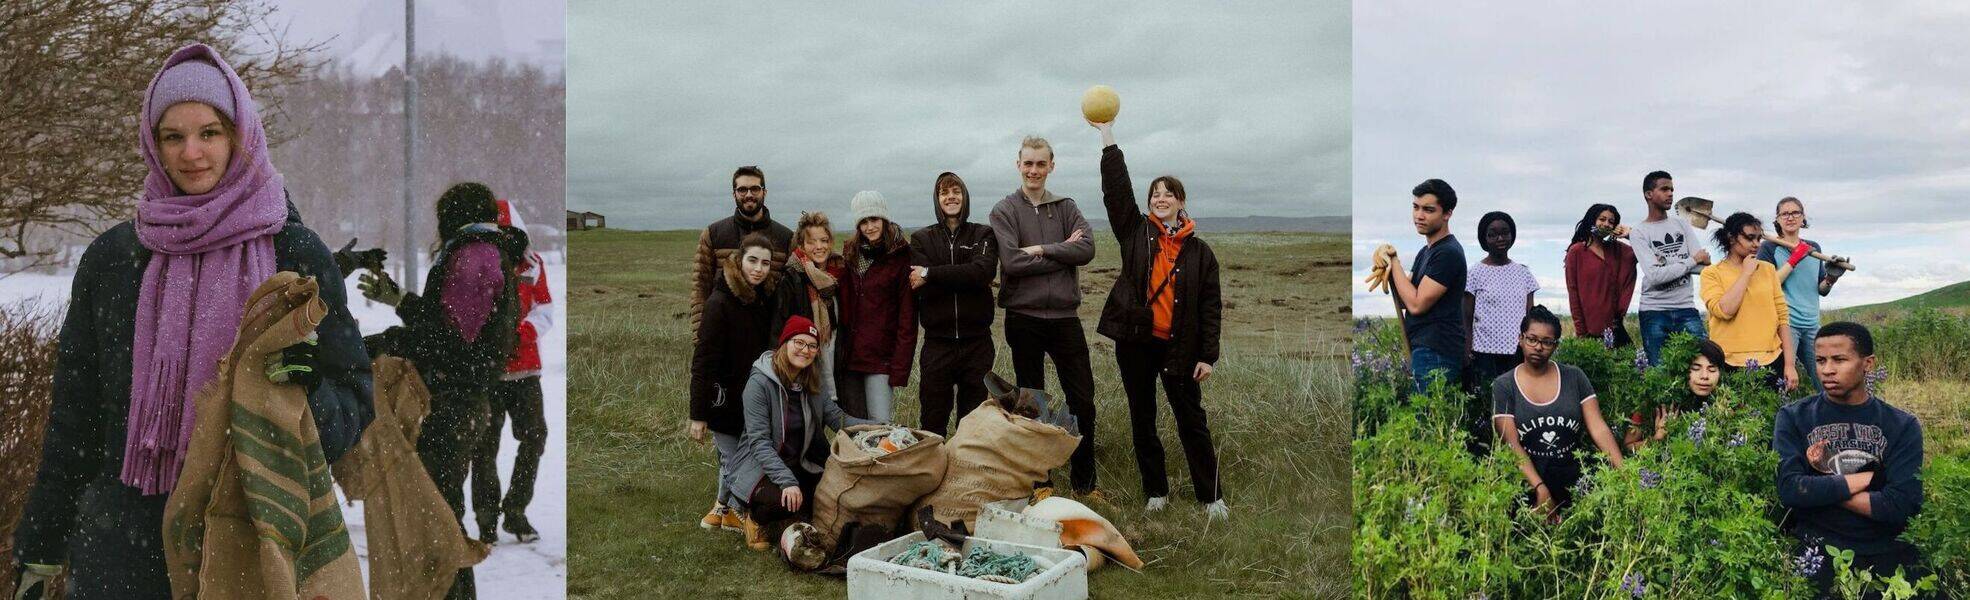 Freiwilligenarbeit Island Naturschutzprojekt